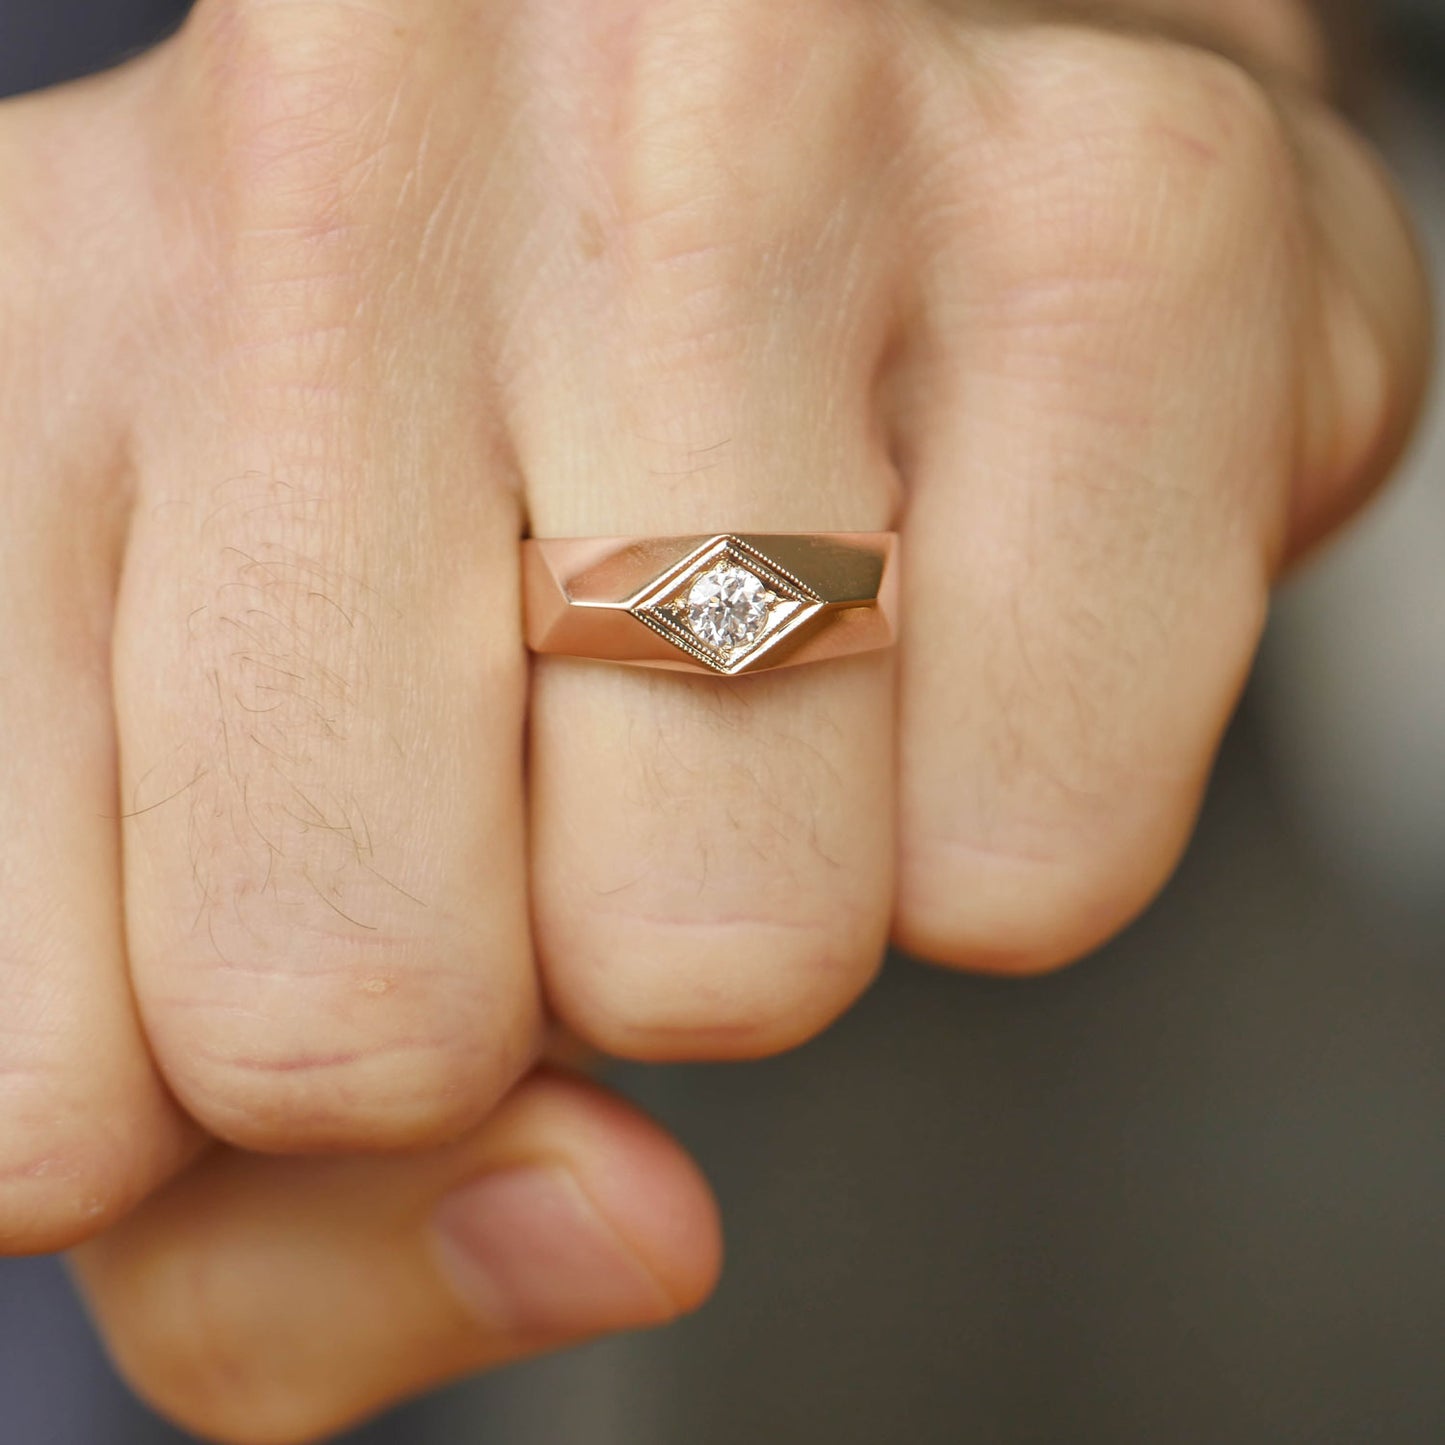 The Fitzgerald Diamond Ring